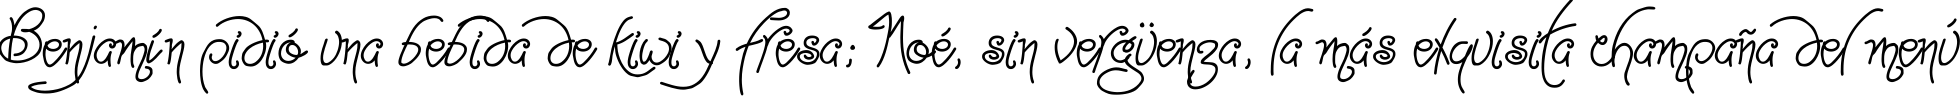 Пример написания шрифтом Point-Dexter текста на испанском